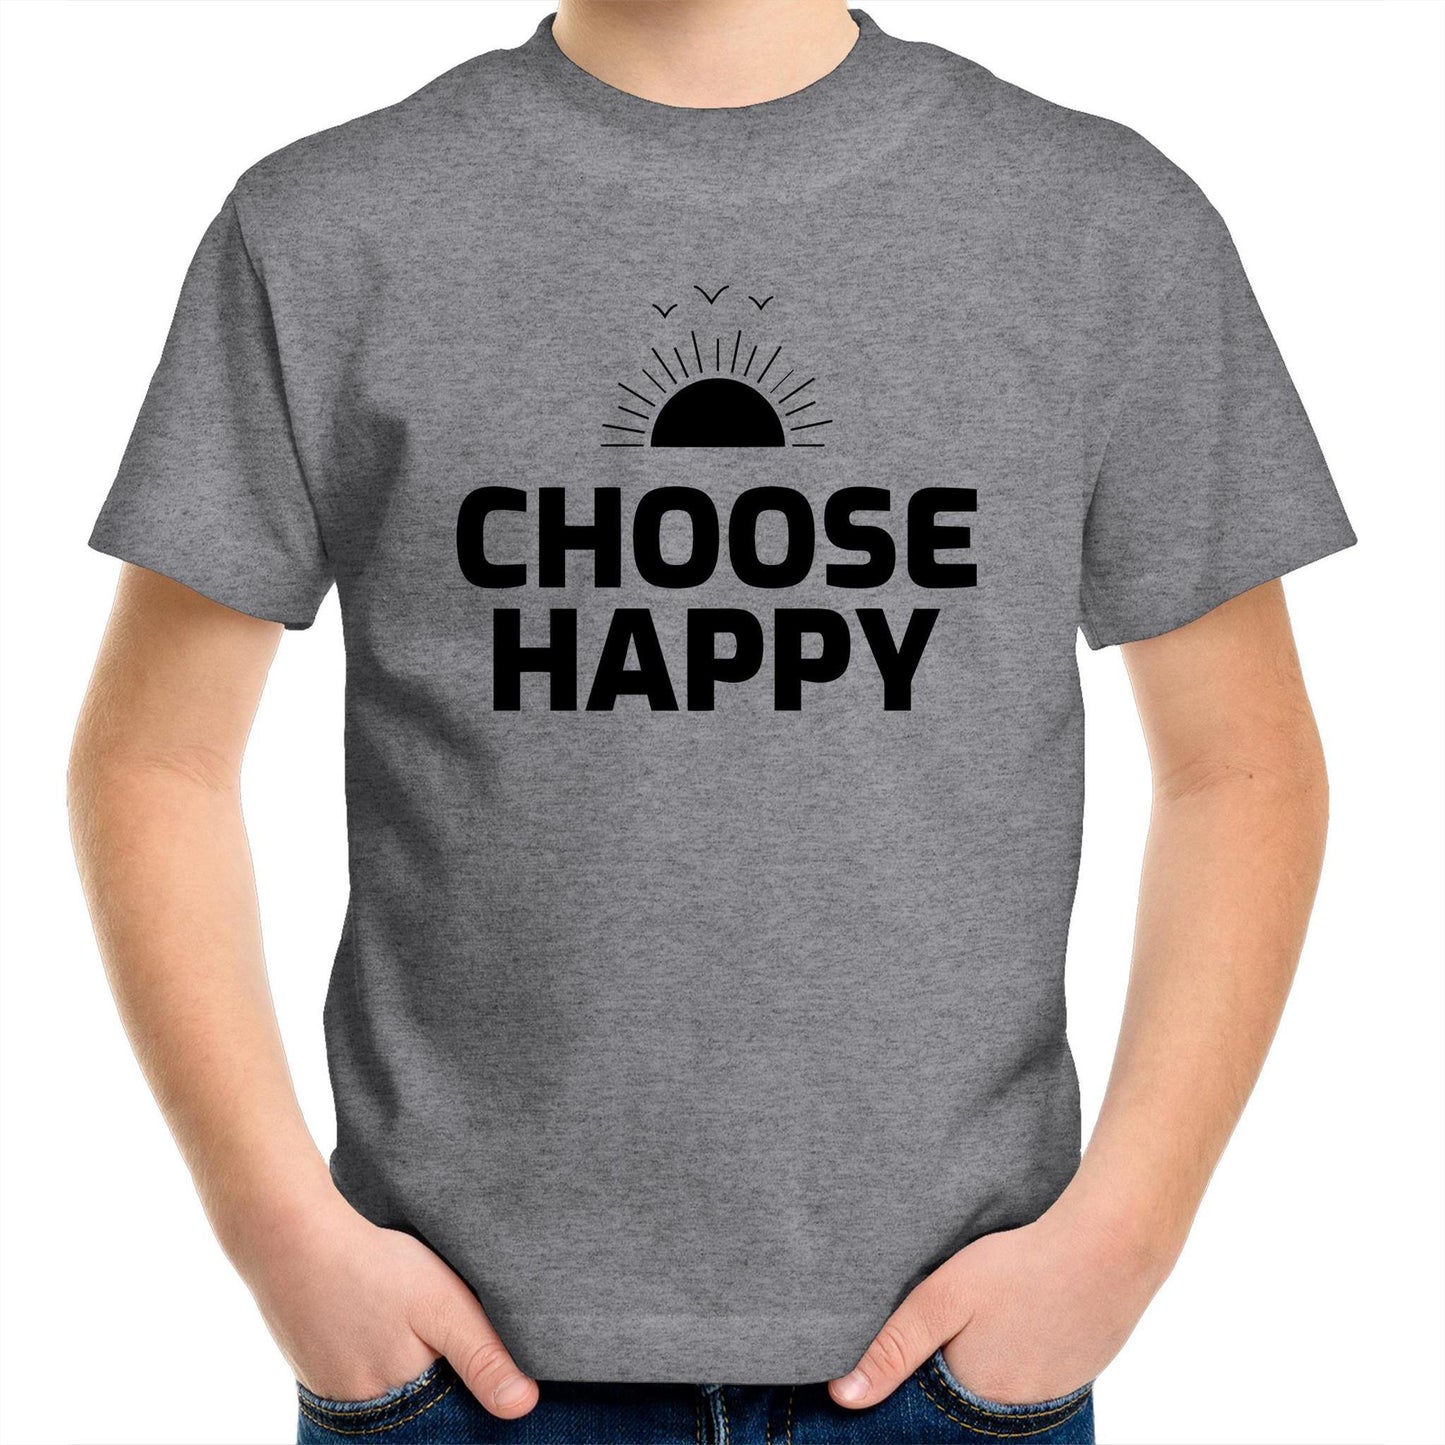 Choose Happy - Kids Youth Crew T-Shirt Grey Marle Kids Youth T-shirt